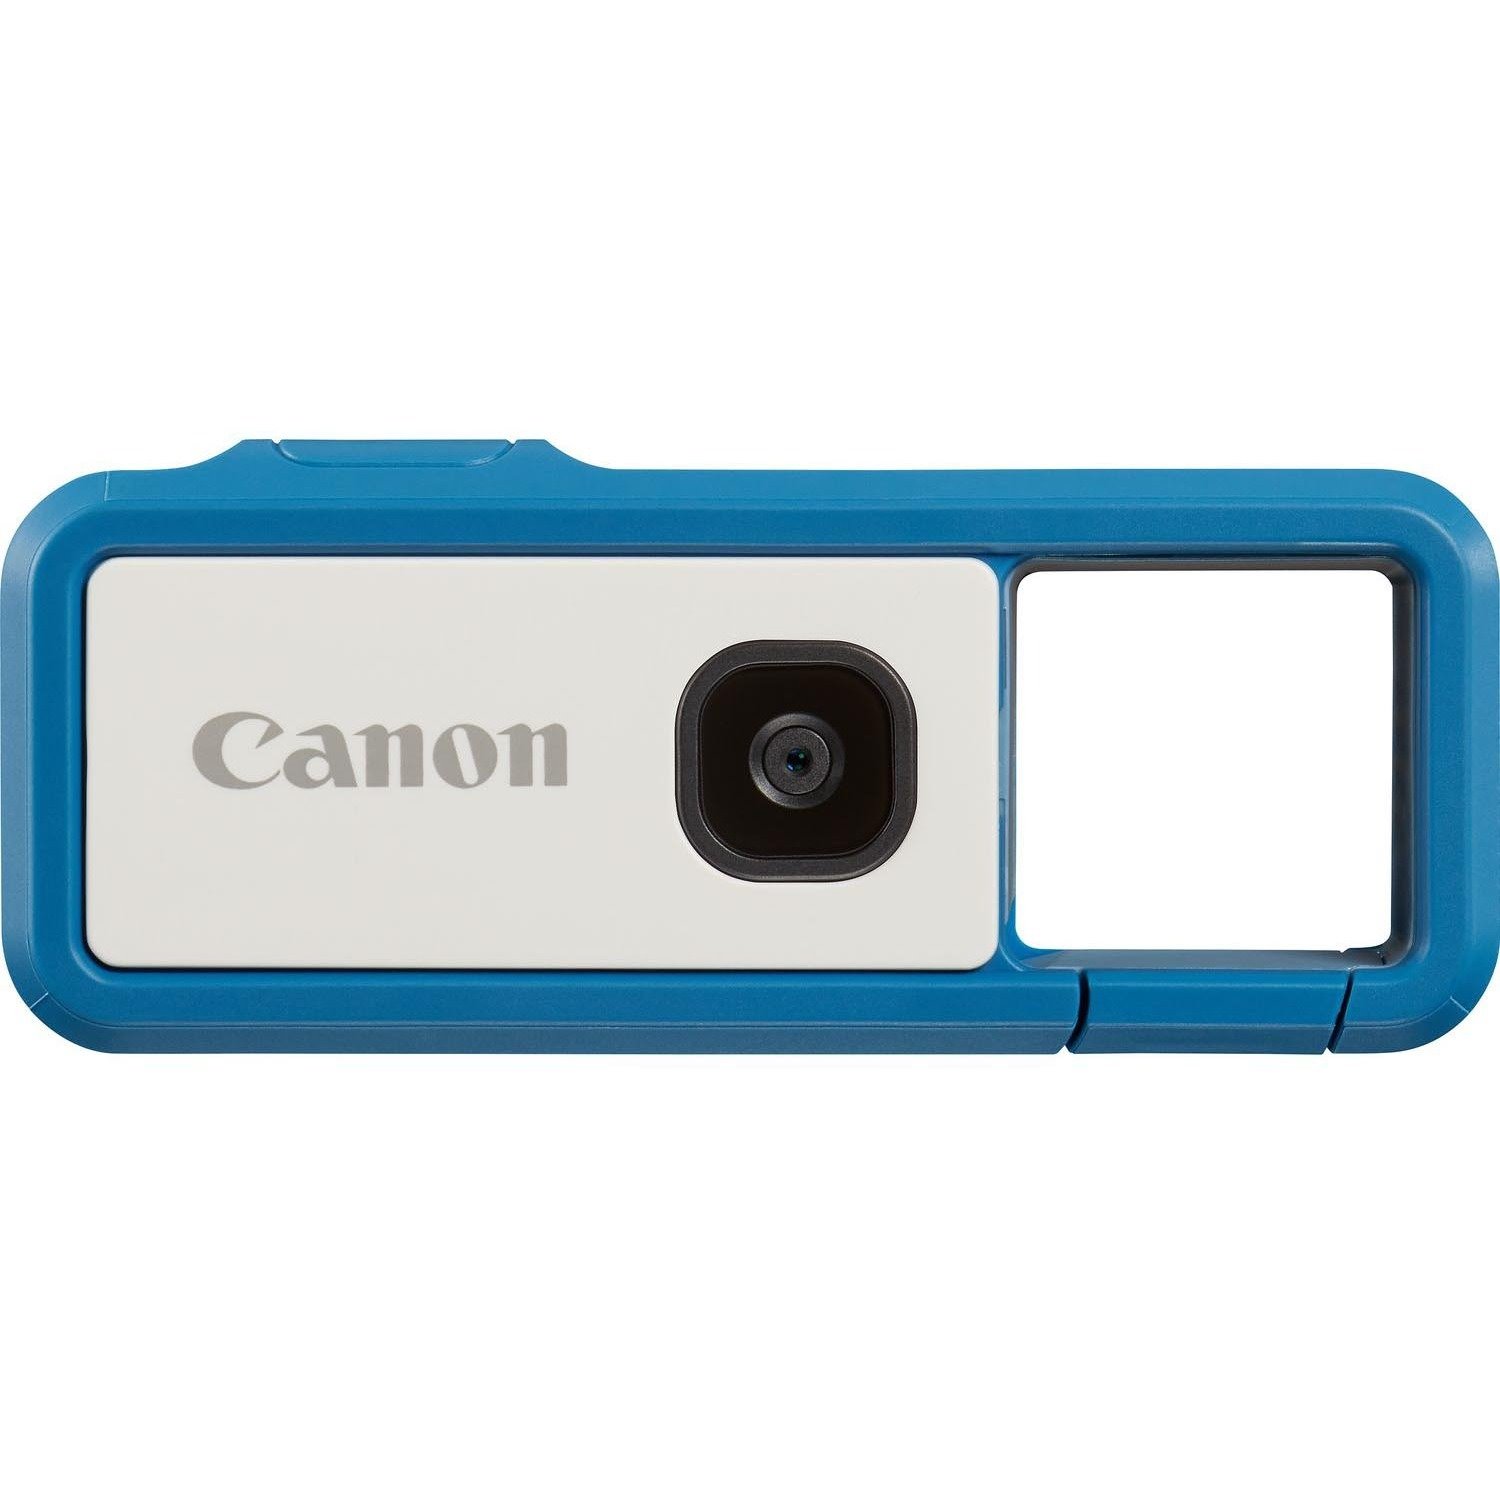 Canon 13 Megapixel Compact Camera - Riptide